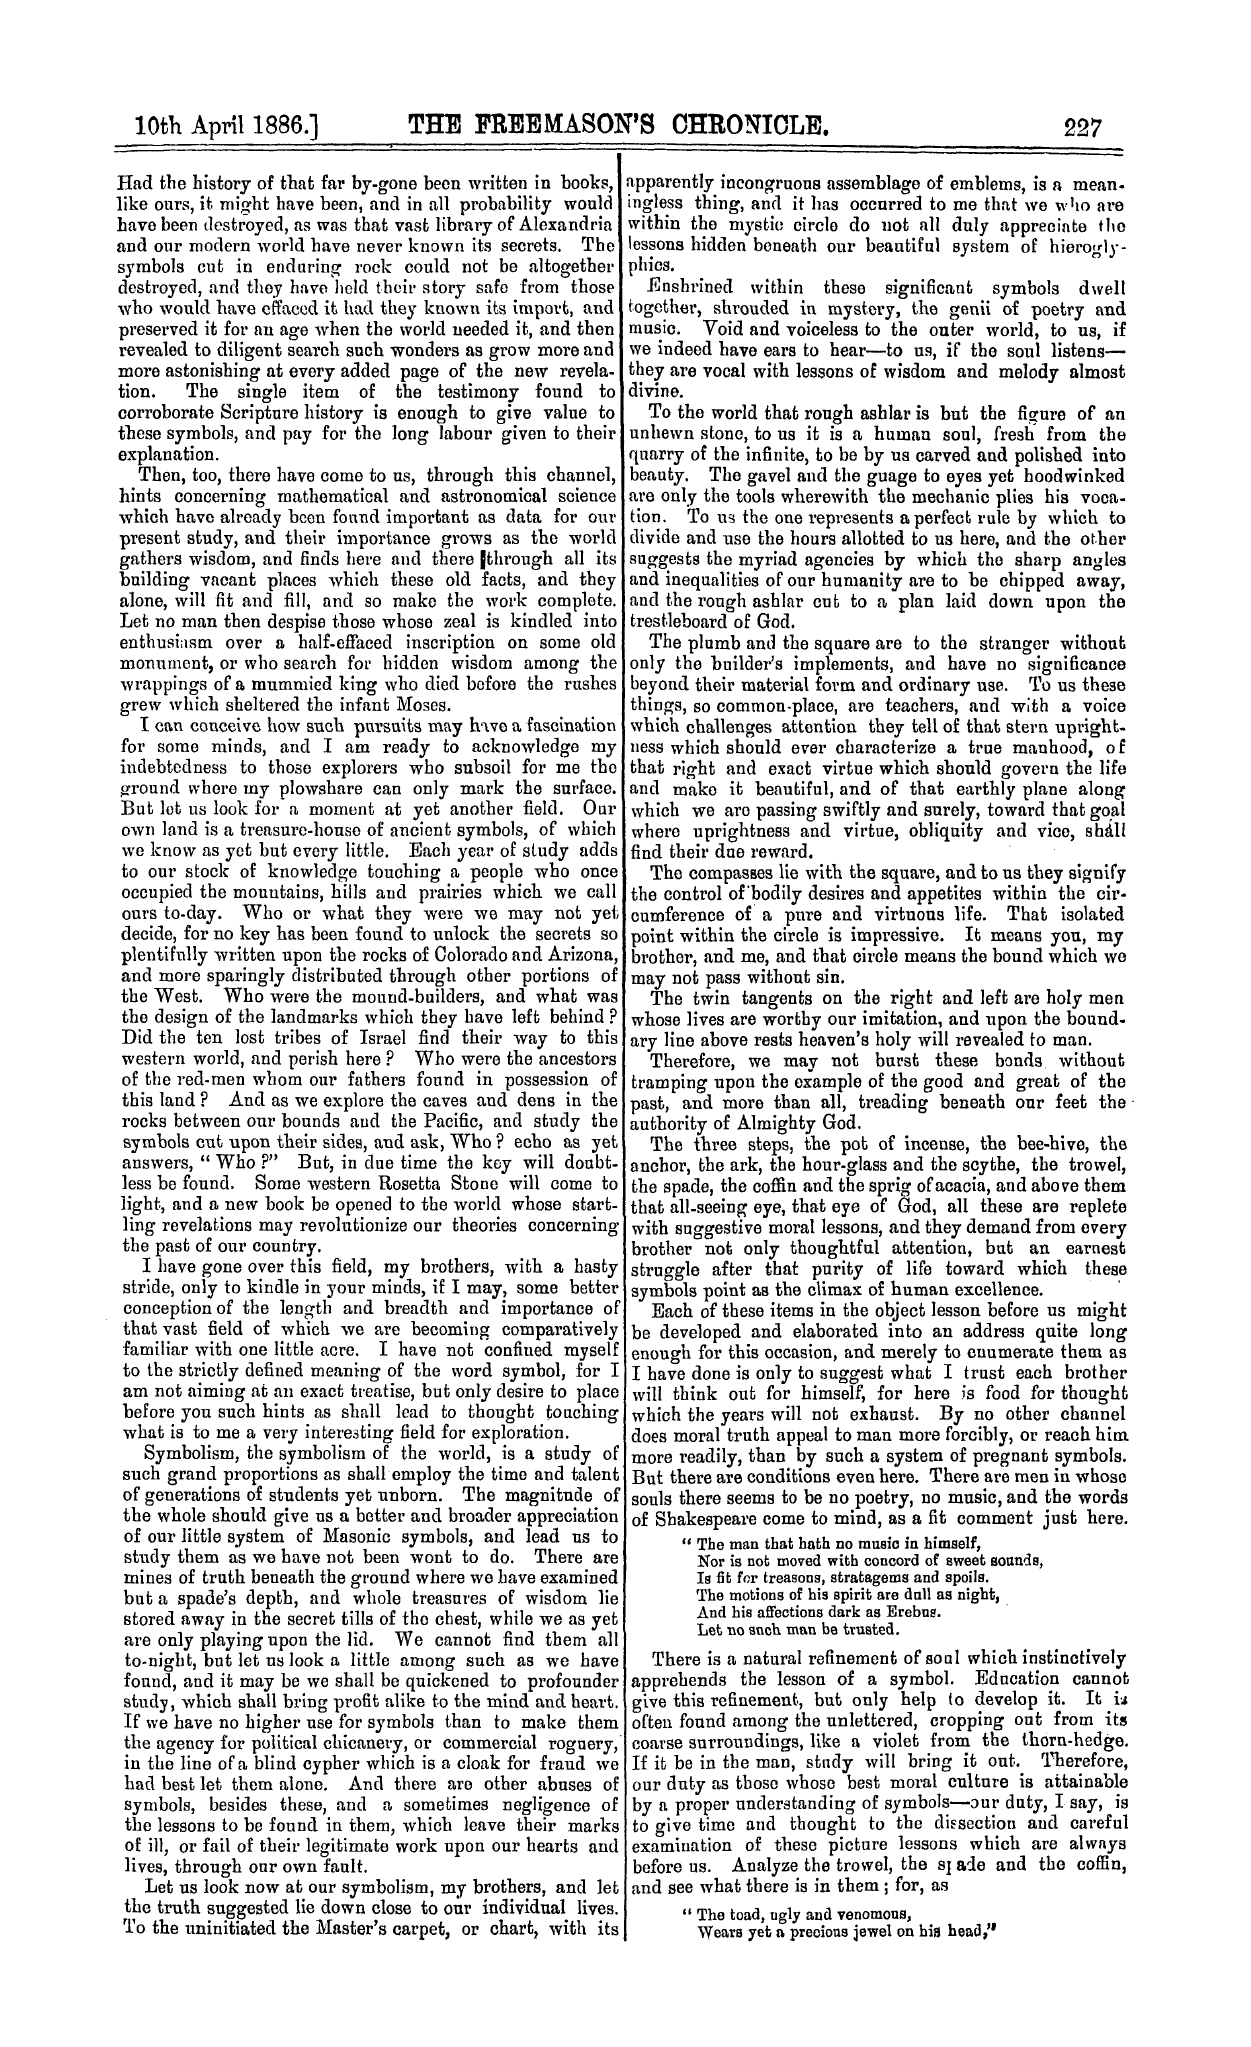 The Freemason's Chronicle: 1886-04-10 - Symbols.